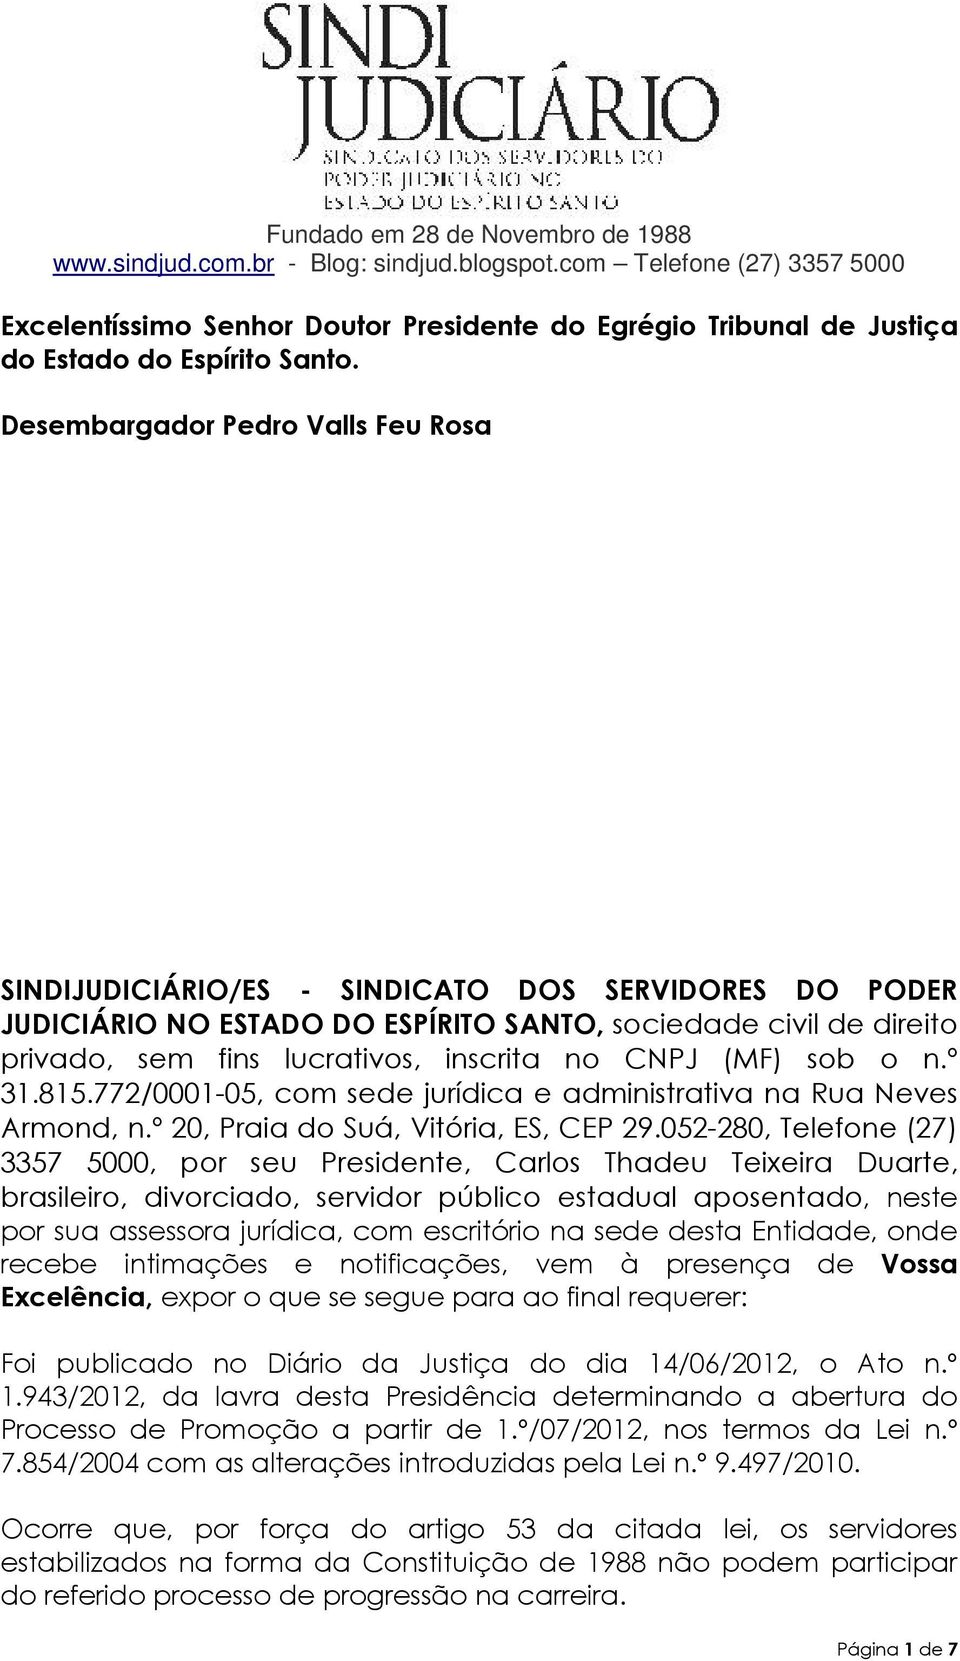 CNPJ (MF) sob o n.º 31.815.772/0001-05, com sede jurídica e administrativa na Rua Neves Armond, n.º 20, Praia do Suá, Vitória, ES, CEP 29.